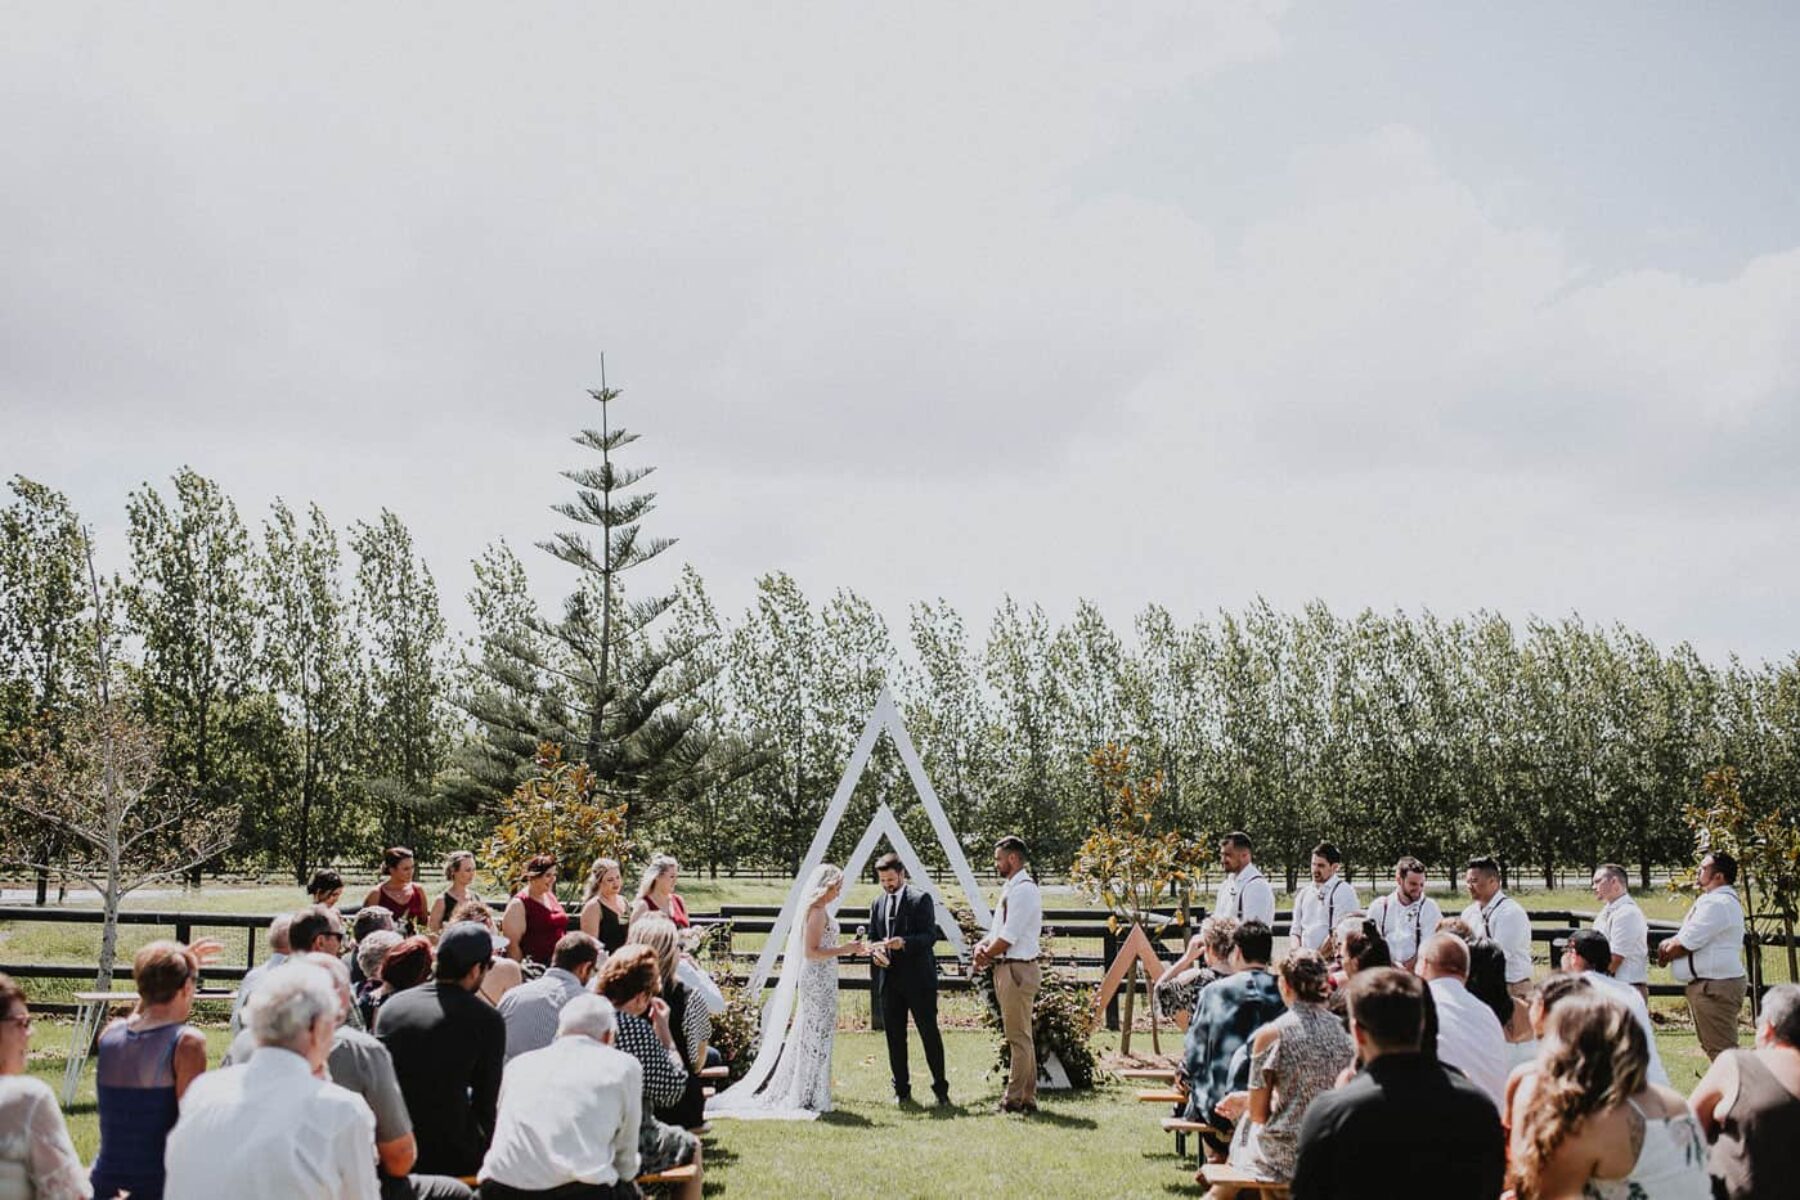 geometric triangular wedding backdrop